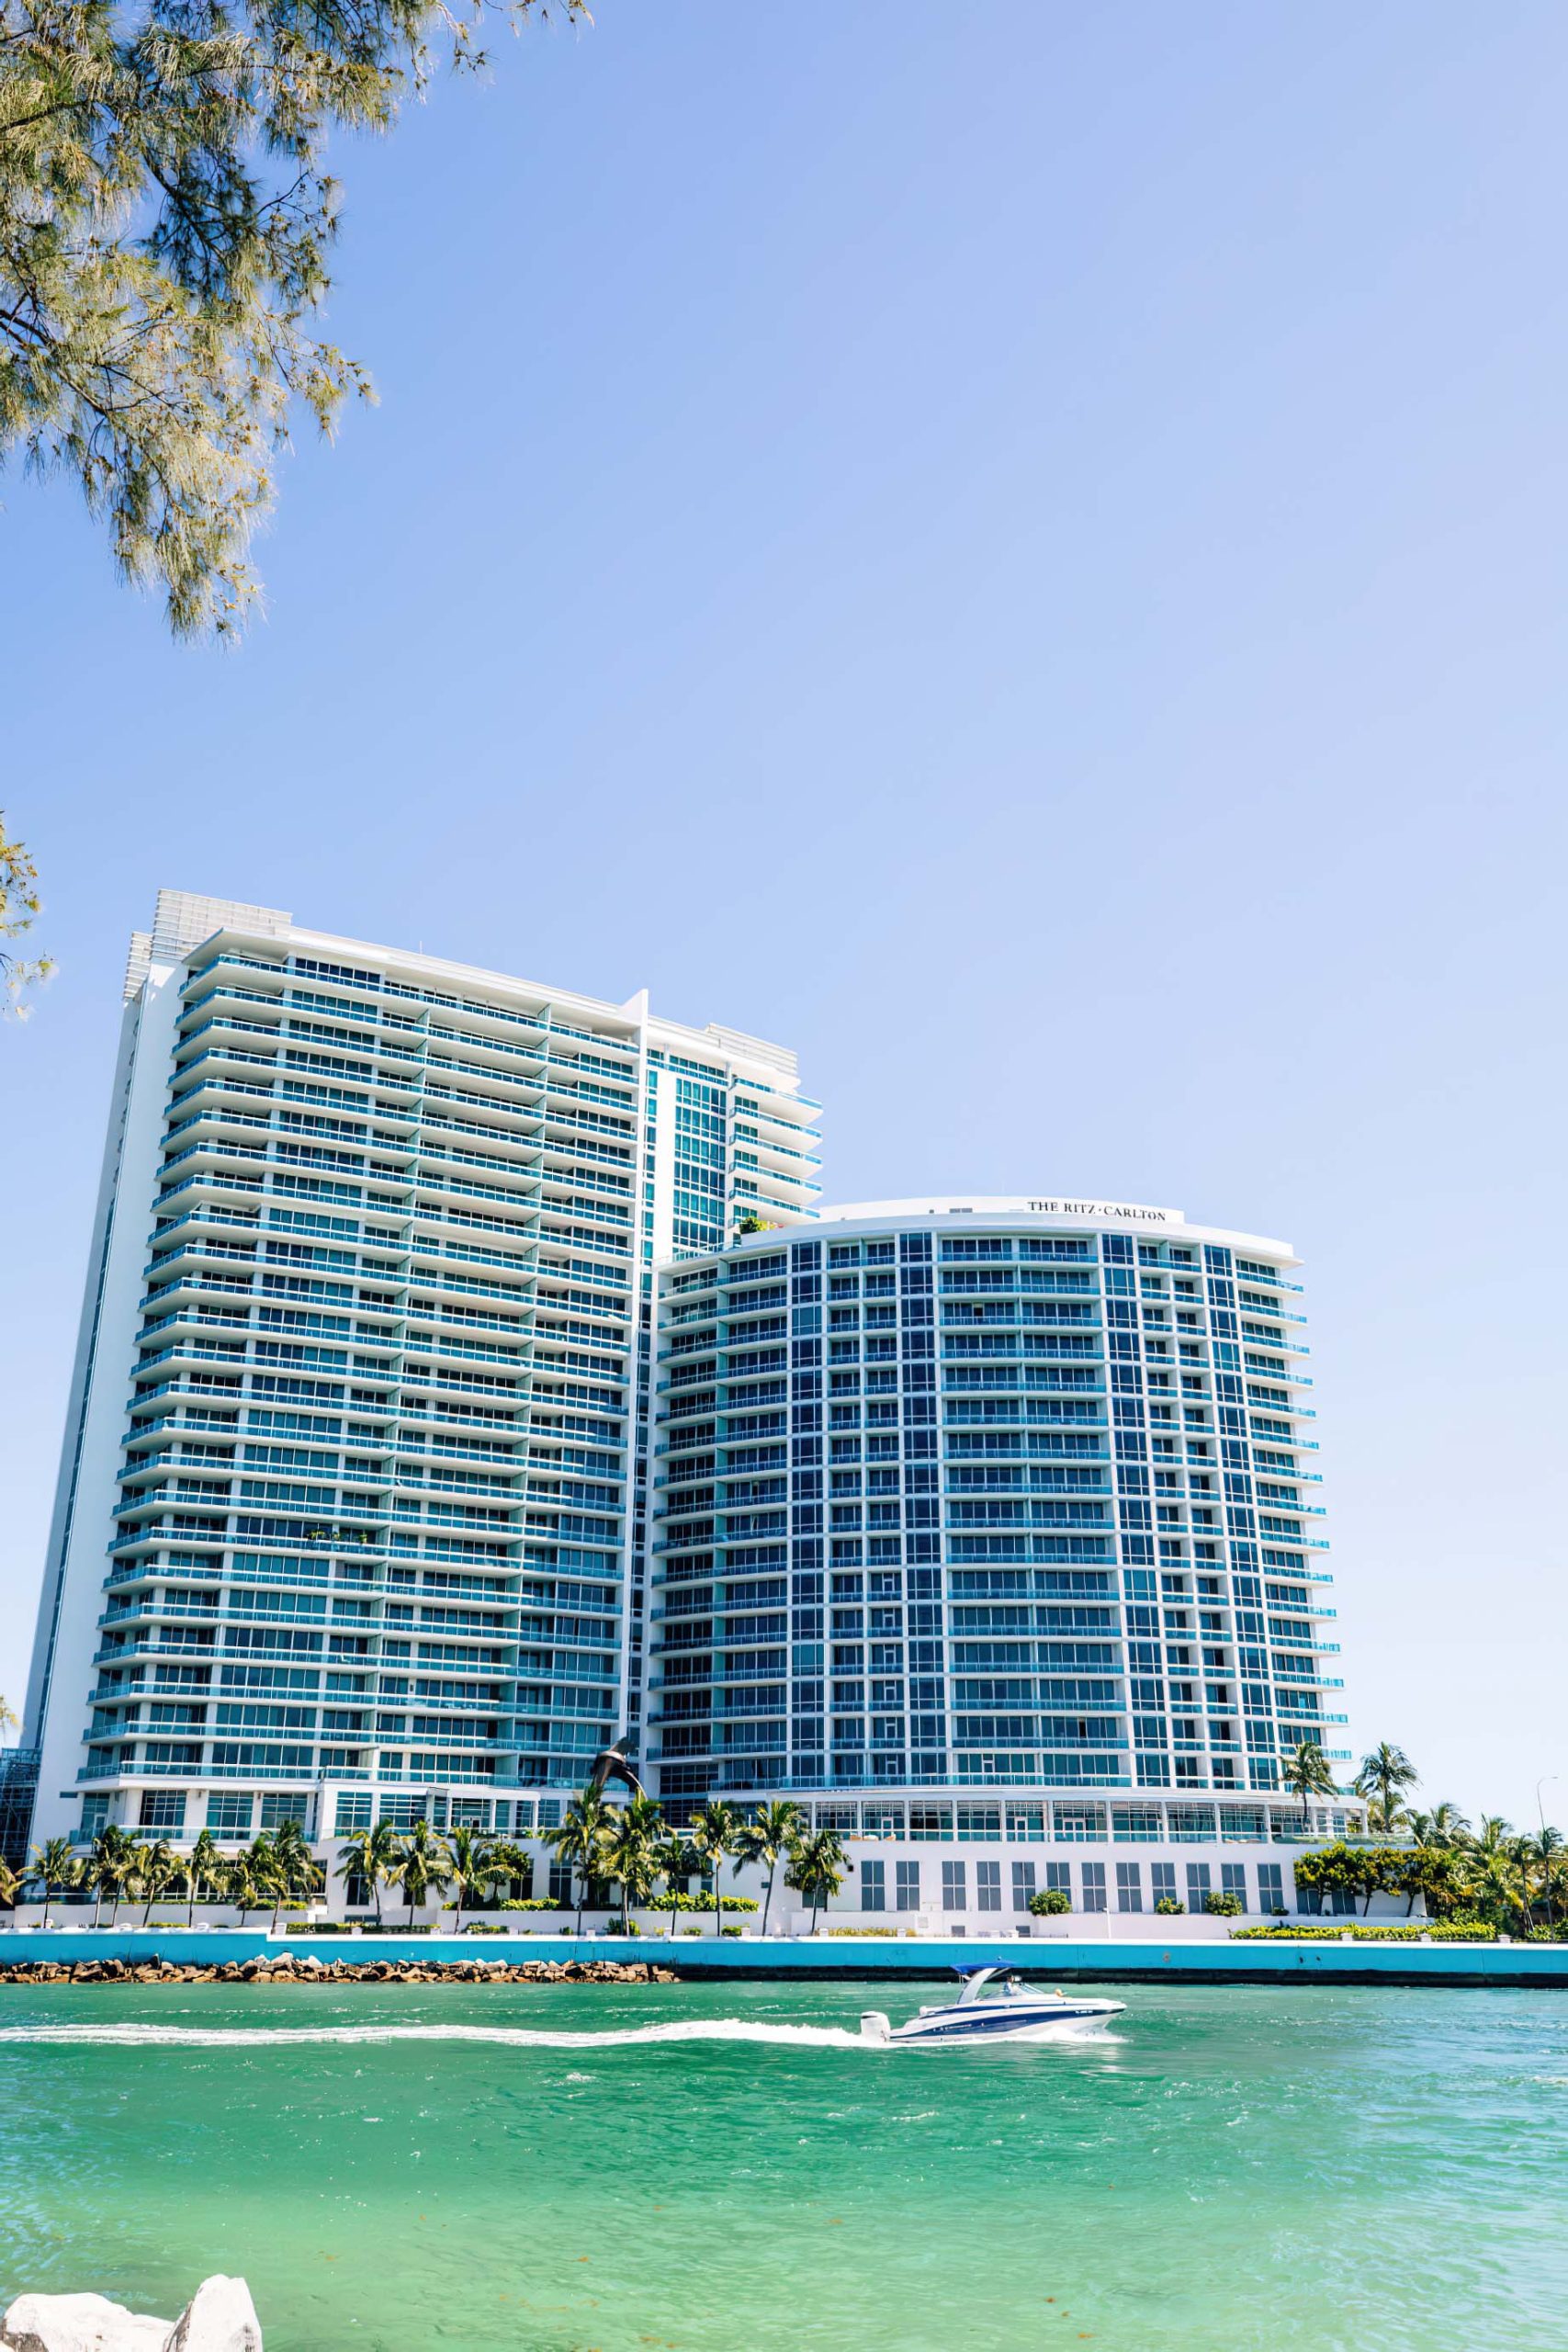 The Ritz-Carlton Bal Harbour, Miami Resort – Bal Harbour, FL, USA – Resort Tower Water View